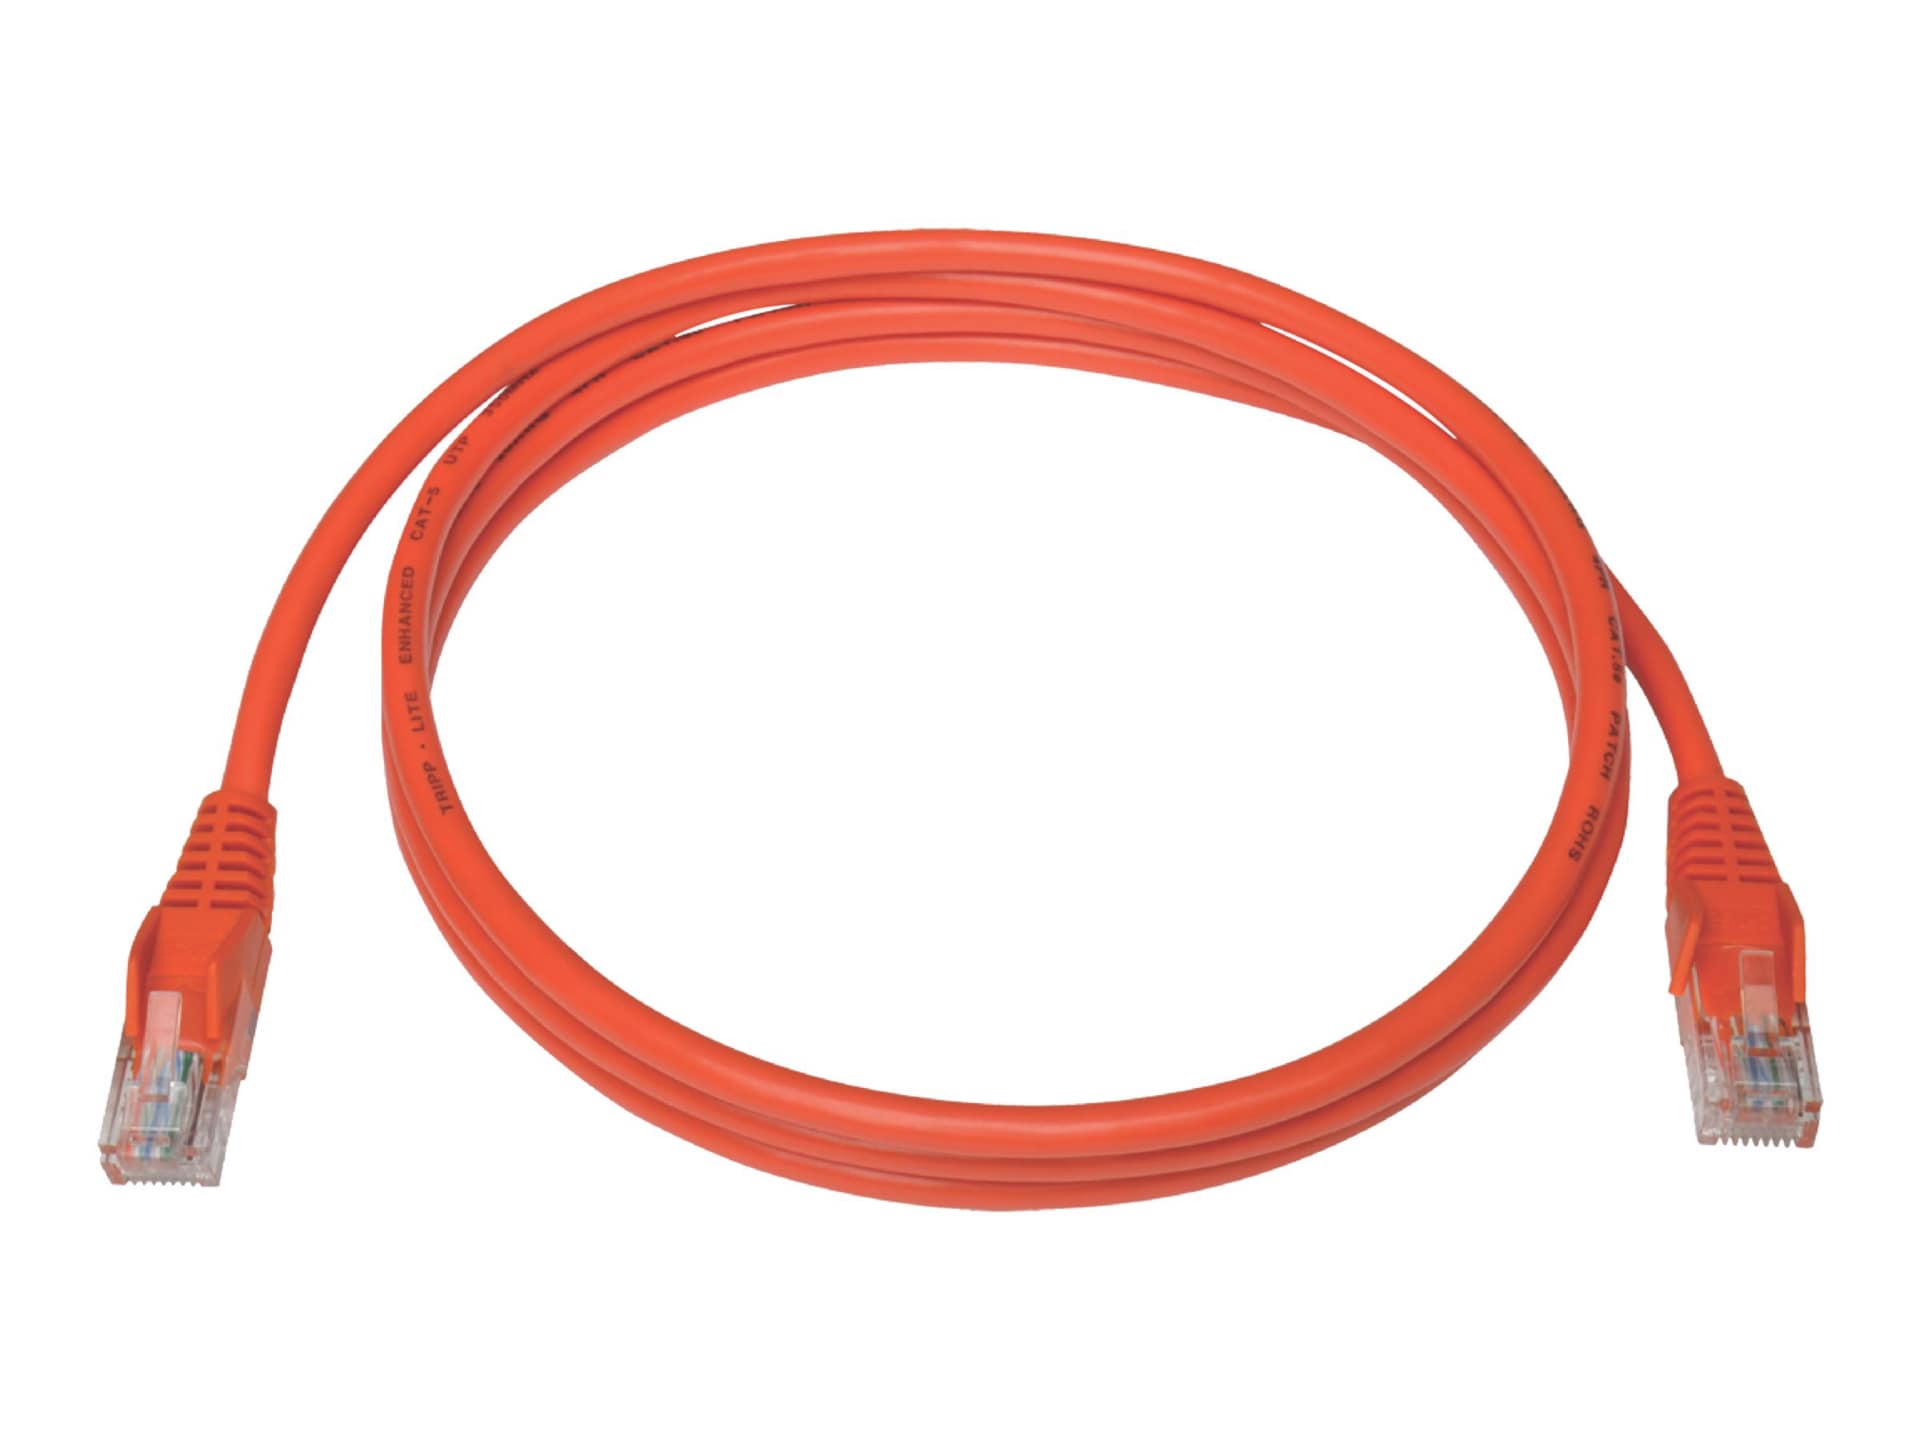 Eaton Tripp Lite Series Cat5e 350 MHz Snagless Molded (UTP) Ethernet Cable (RJ45 M/M), PoE - Orange, 5 ft. (1.52 m) -